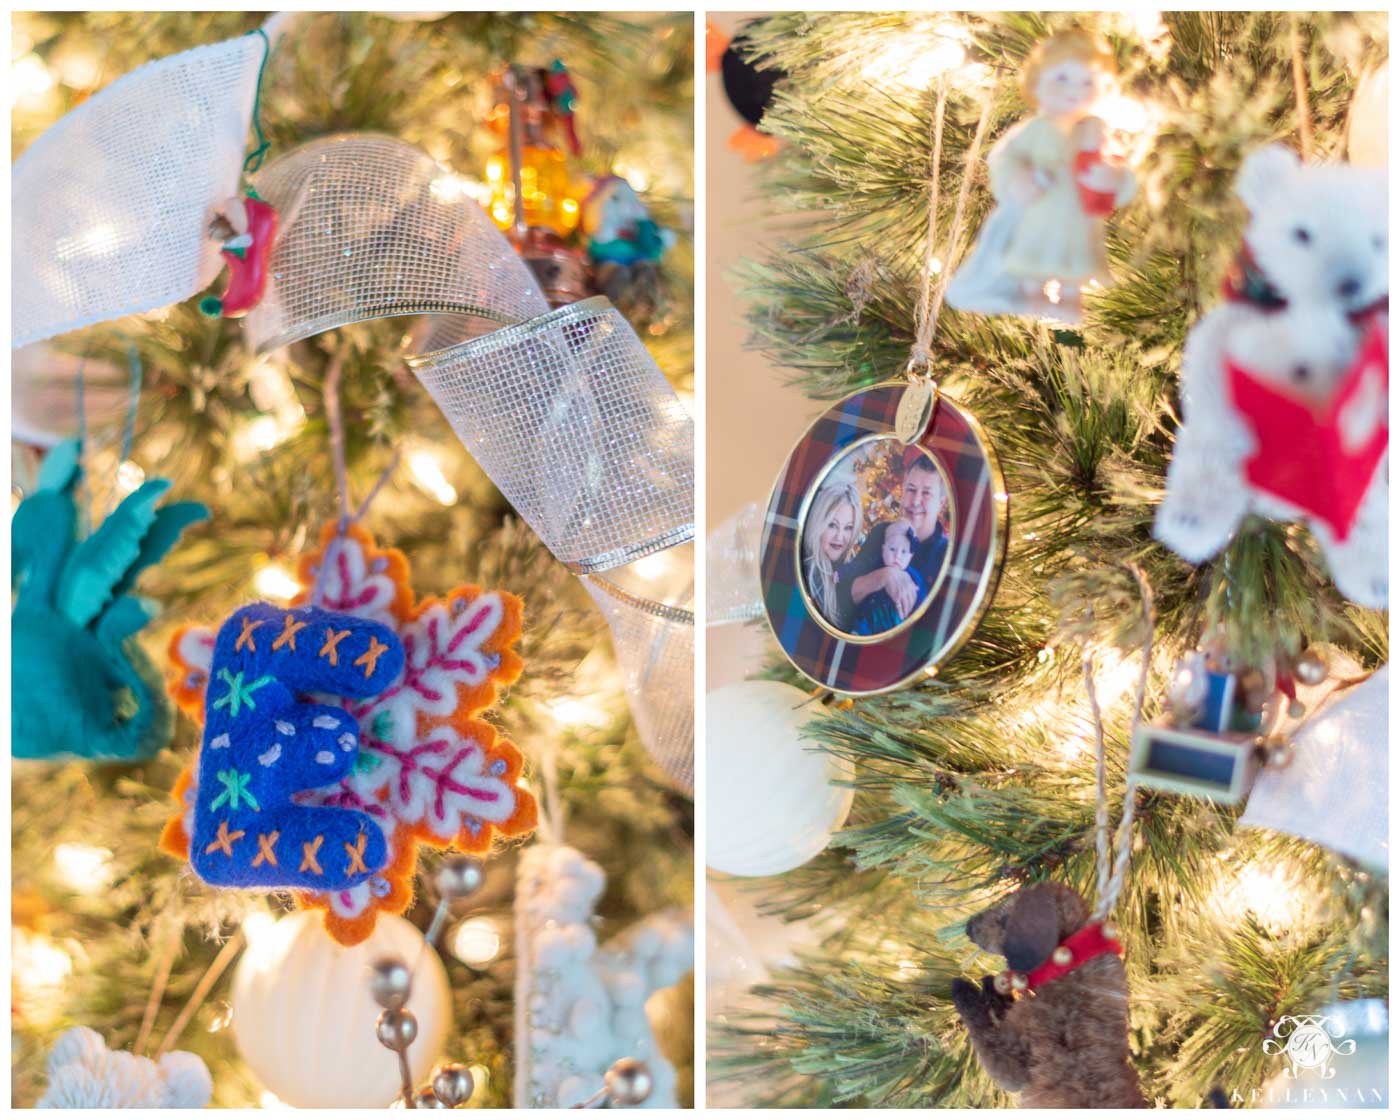 Nostalgia Christmas Tree with Annual Ornaments